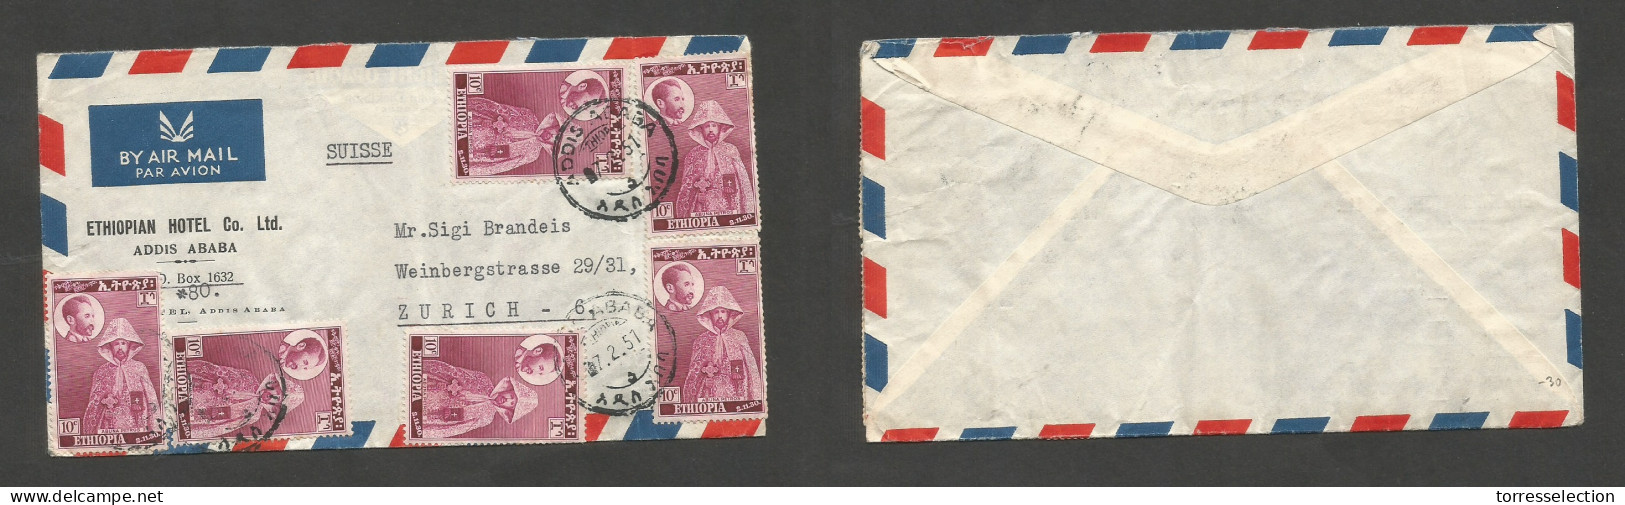 ETHIOPIA. 1951 (7 Febr) Addis Ababa - Zurich, Switzerland. Air Multifkd Env, Tied Cds, At 60c Rate. V. Appealing. SALE. - Etiopía